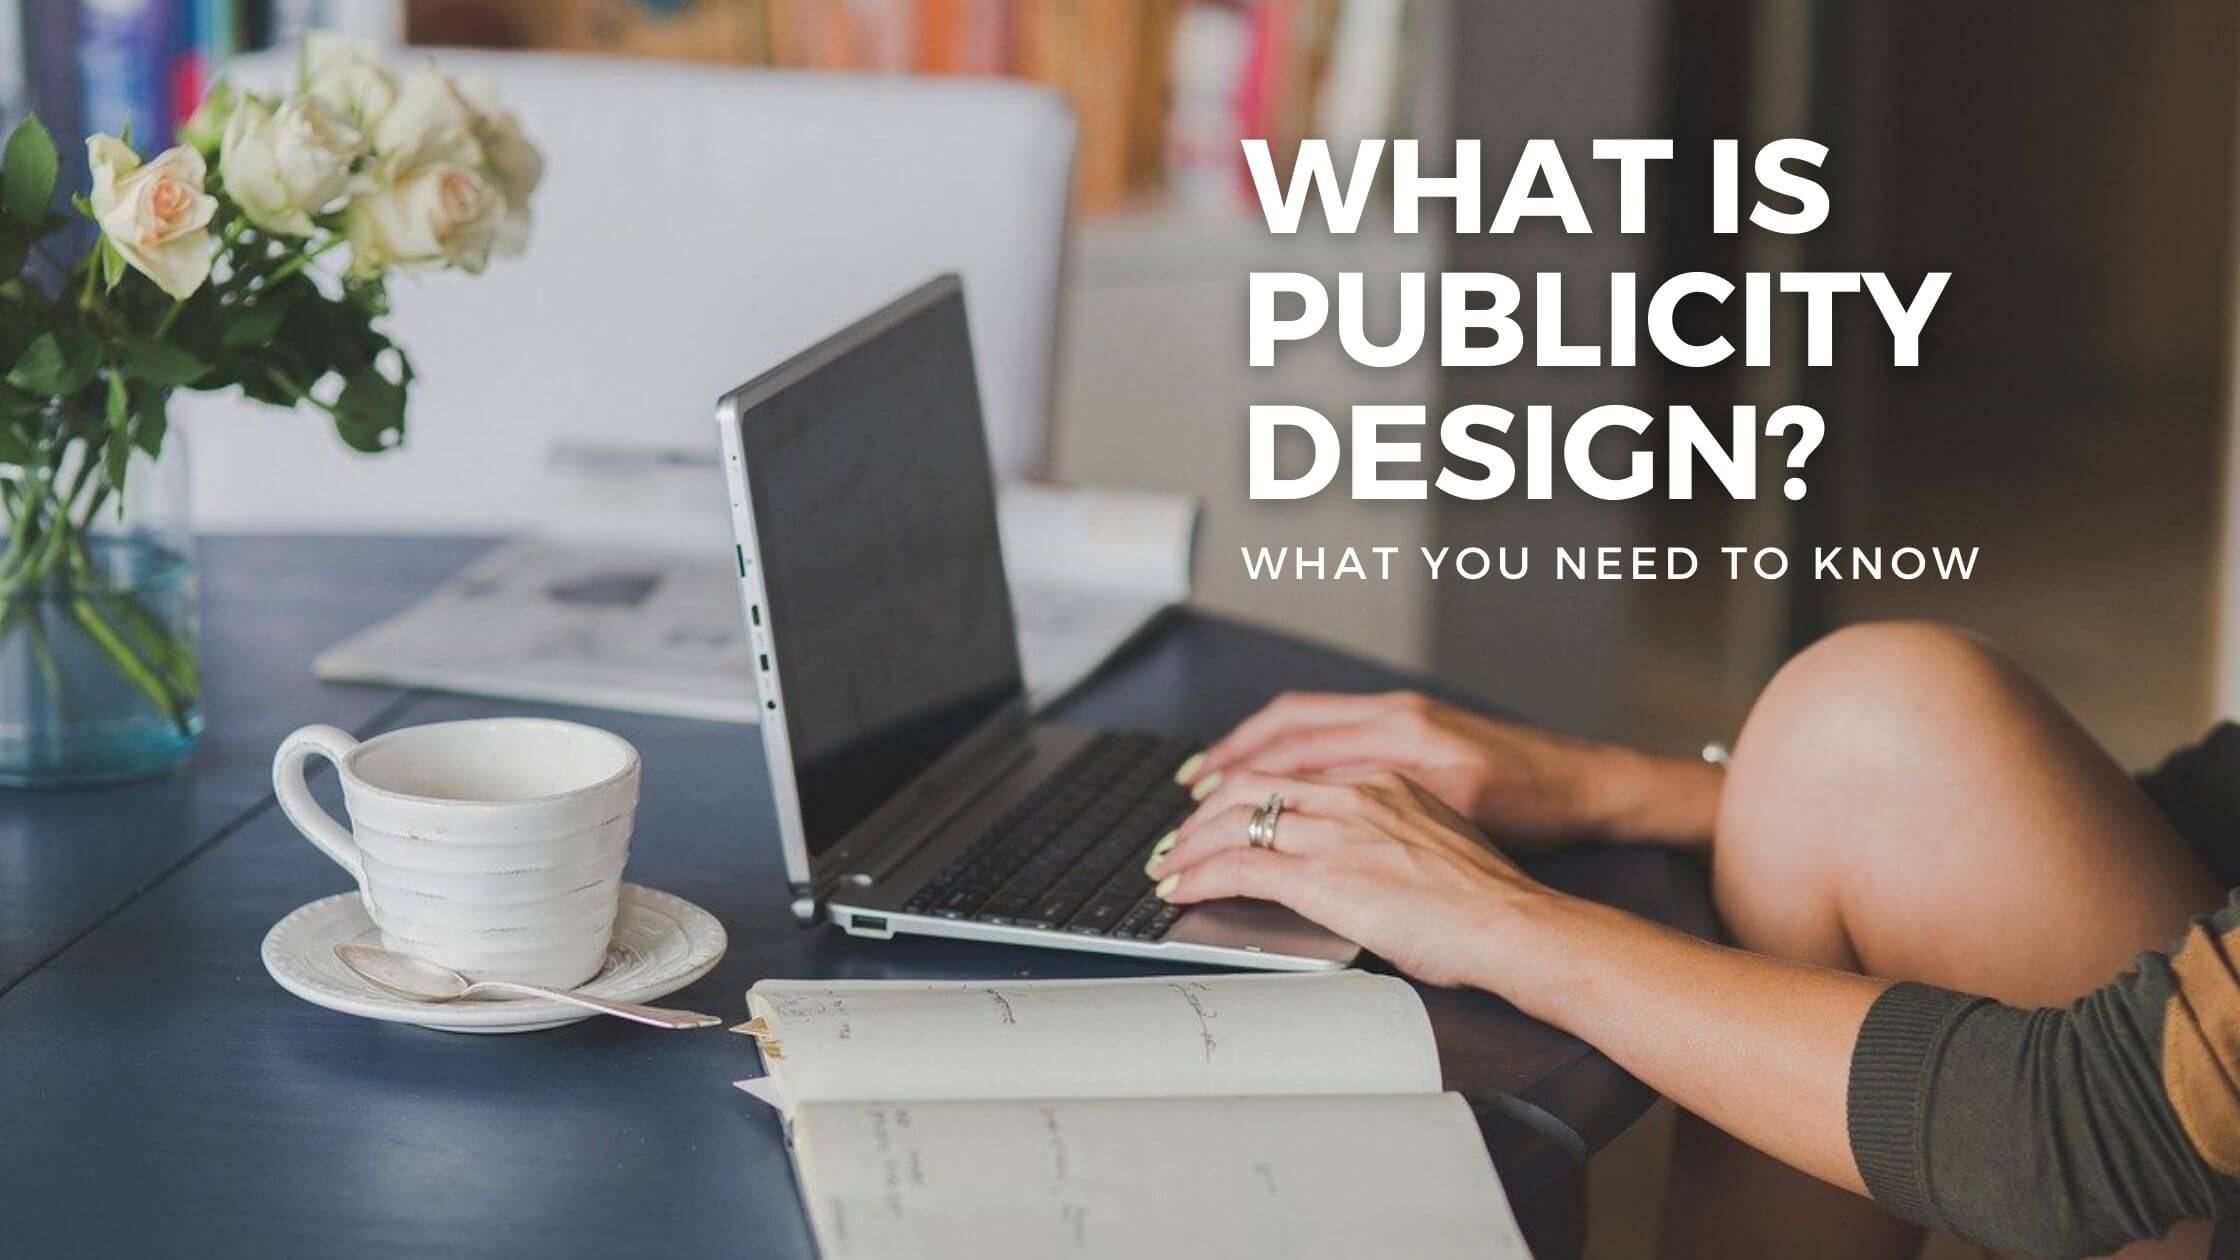 What is Publicity Design?